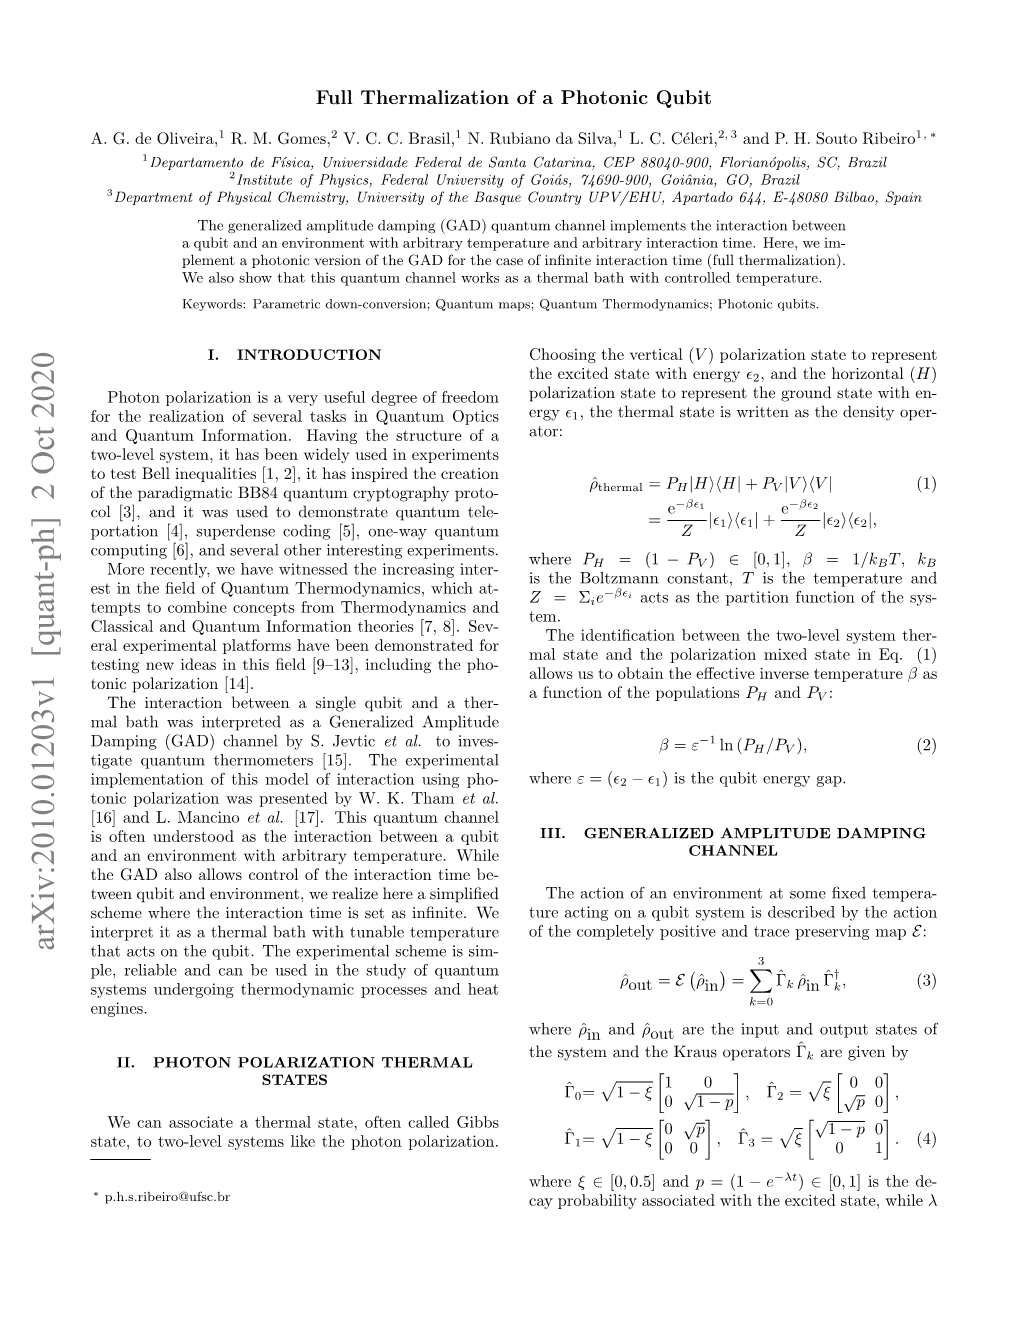 Arxiv:2010.01203V1 [Quant-Ph] 2 Oct 2020 That Acts on the Qubit